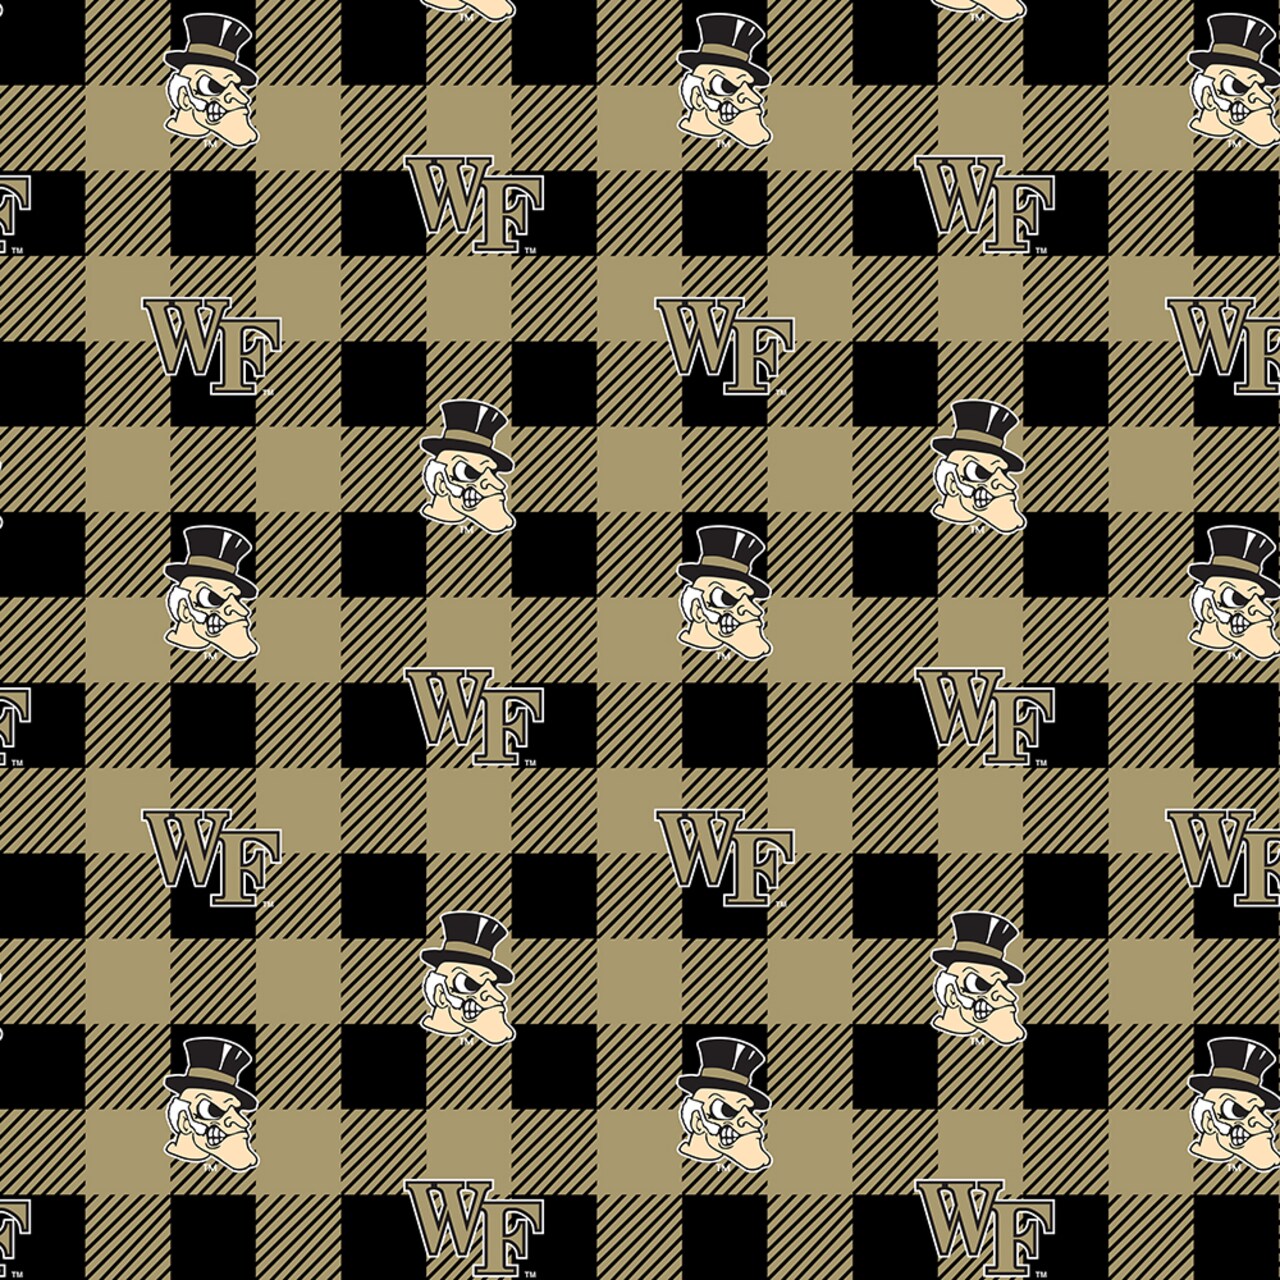 Sykel Enterprises-Wake Forest University Fleece Fabric-Wake Forest Demon Deacons Buffalo Plaid Fleece Blanket Fabric-Sold by the yard